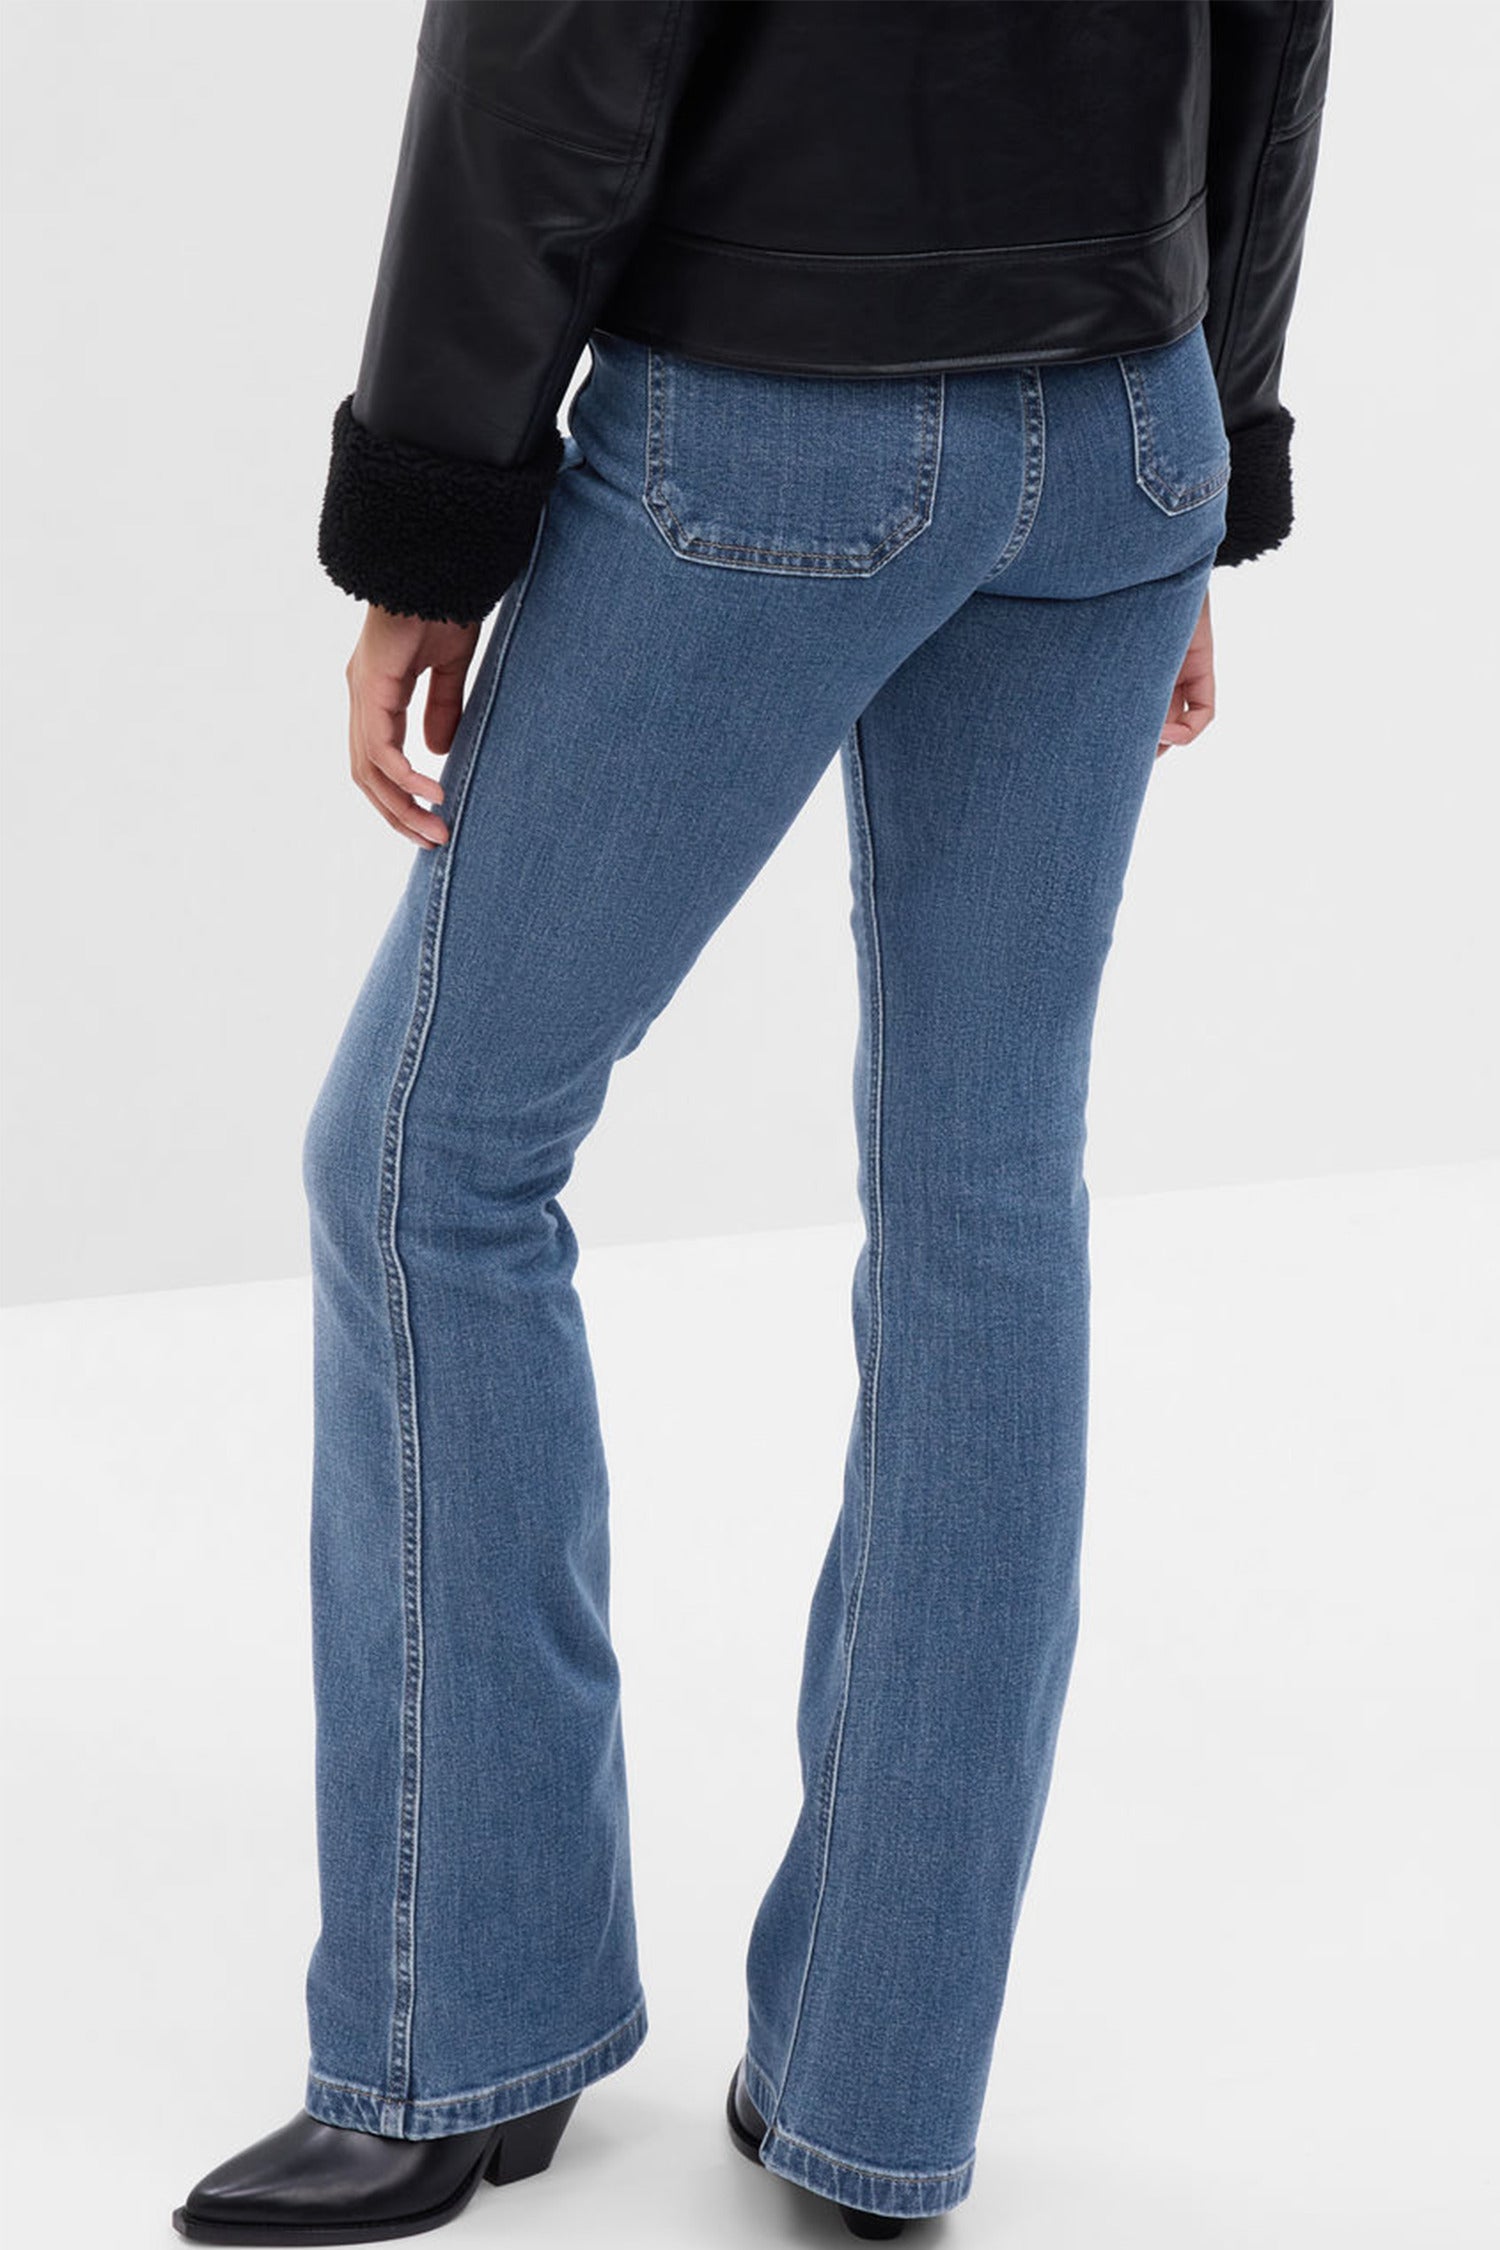 Gap x LoveShackFancy High Rise Floral Flare Jeans - Women's Bottoms ...